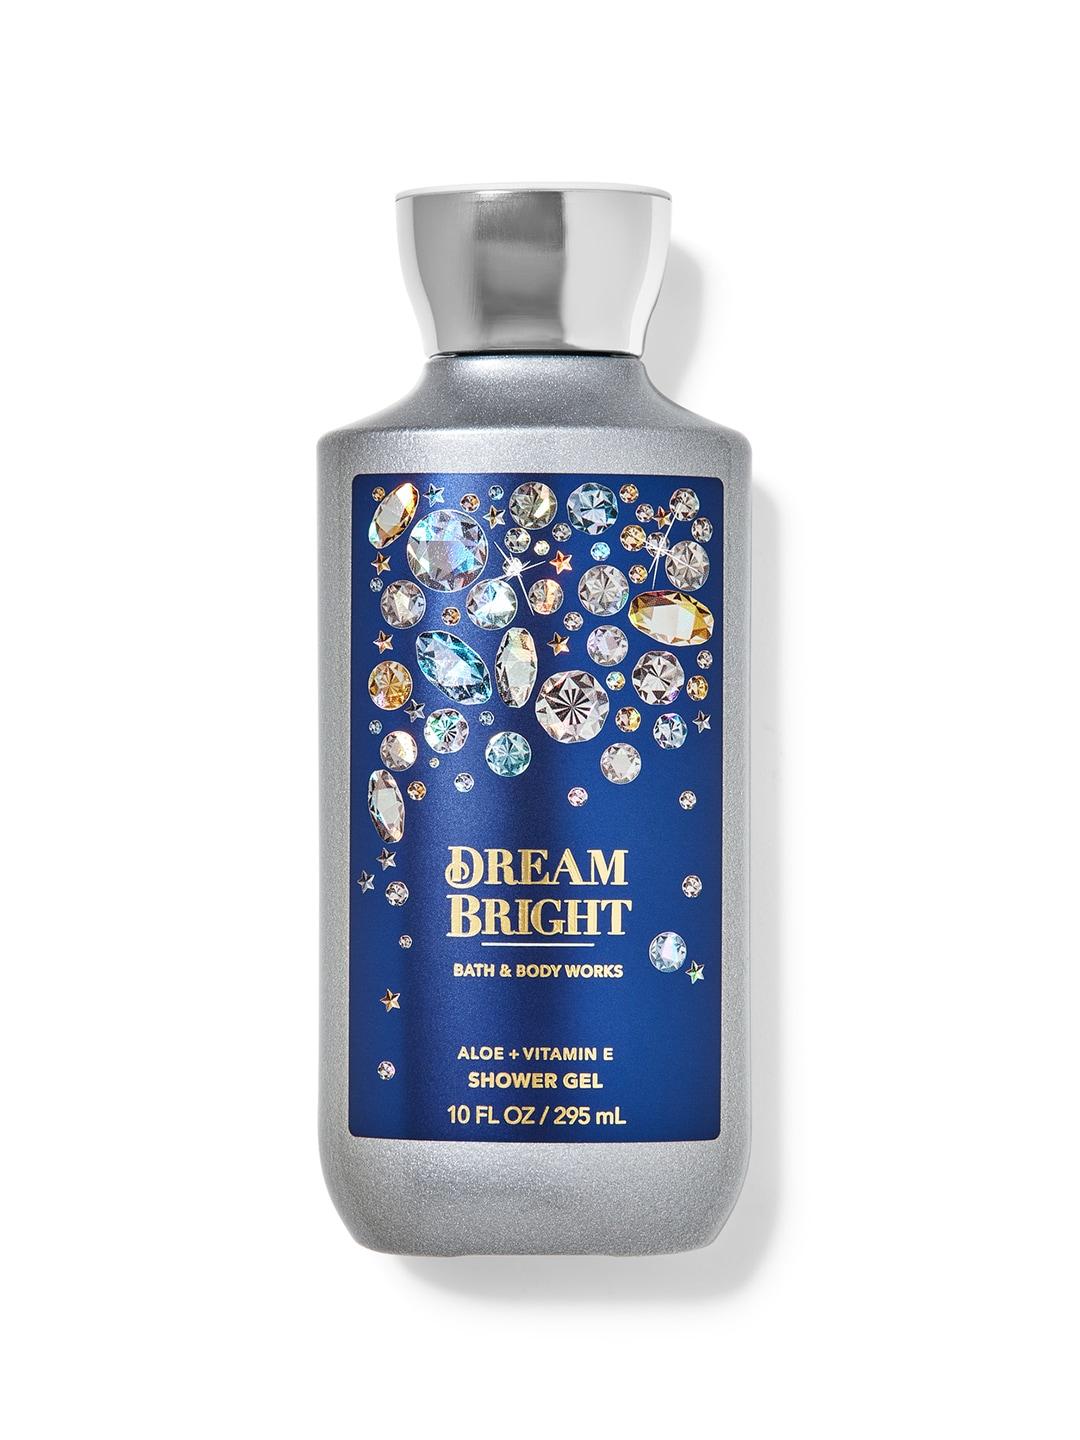 Bath & Body Works Dream Bright Shower Gel with Aloe & Vitamin E - 295ml